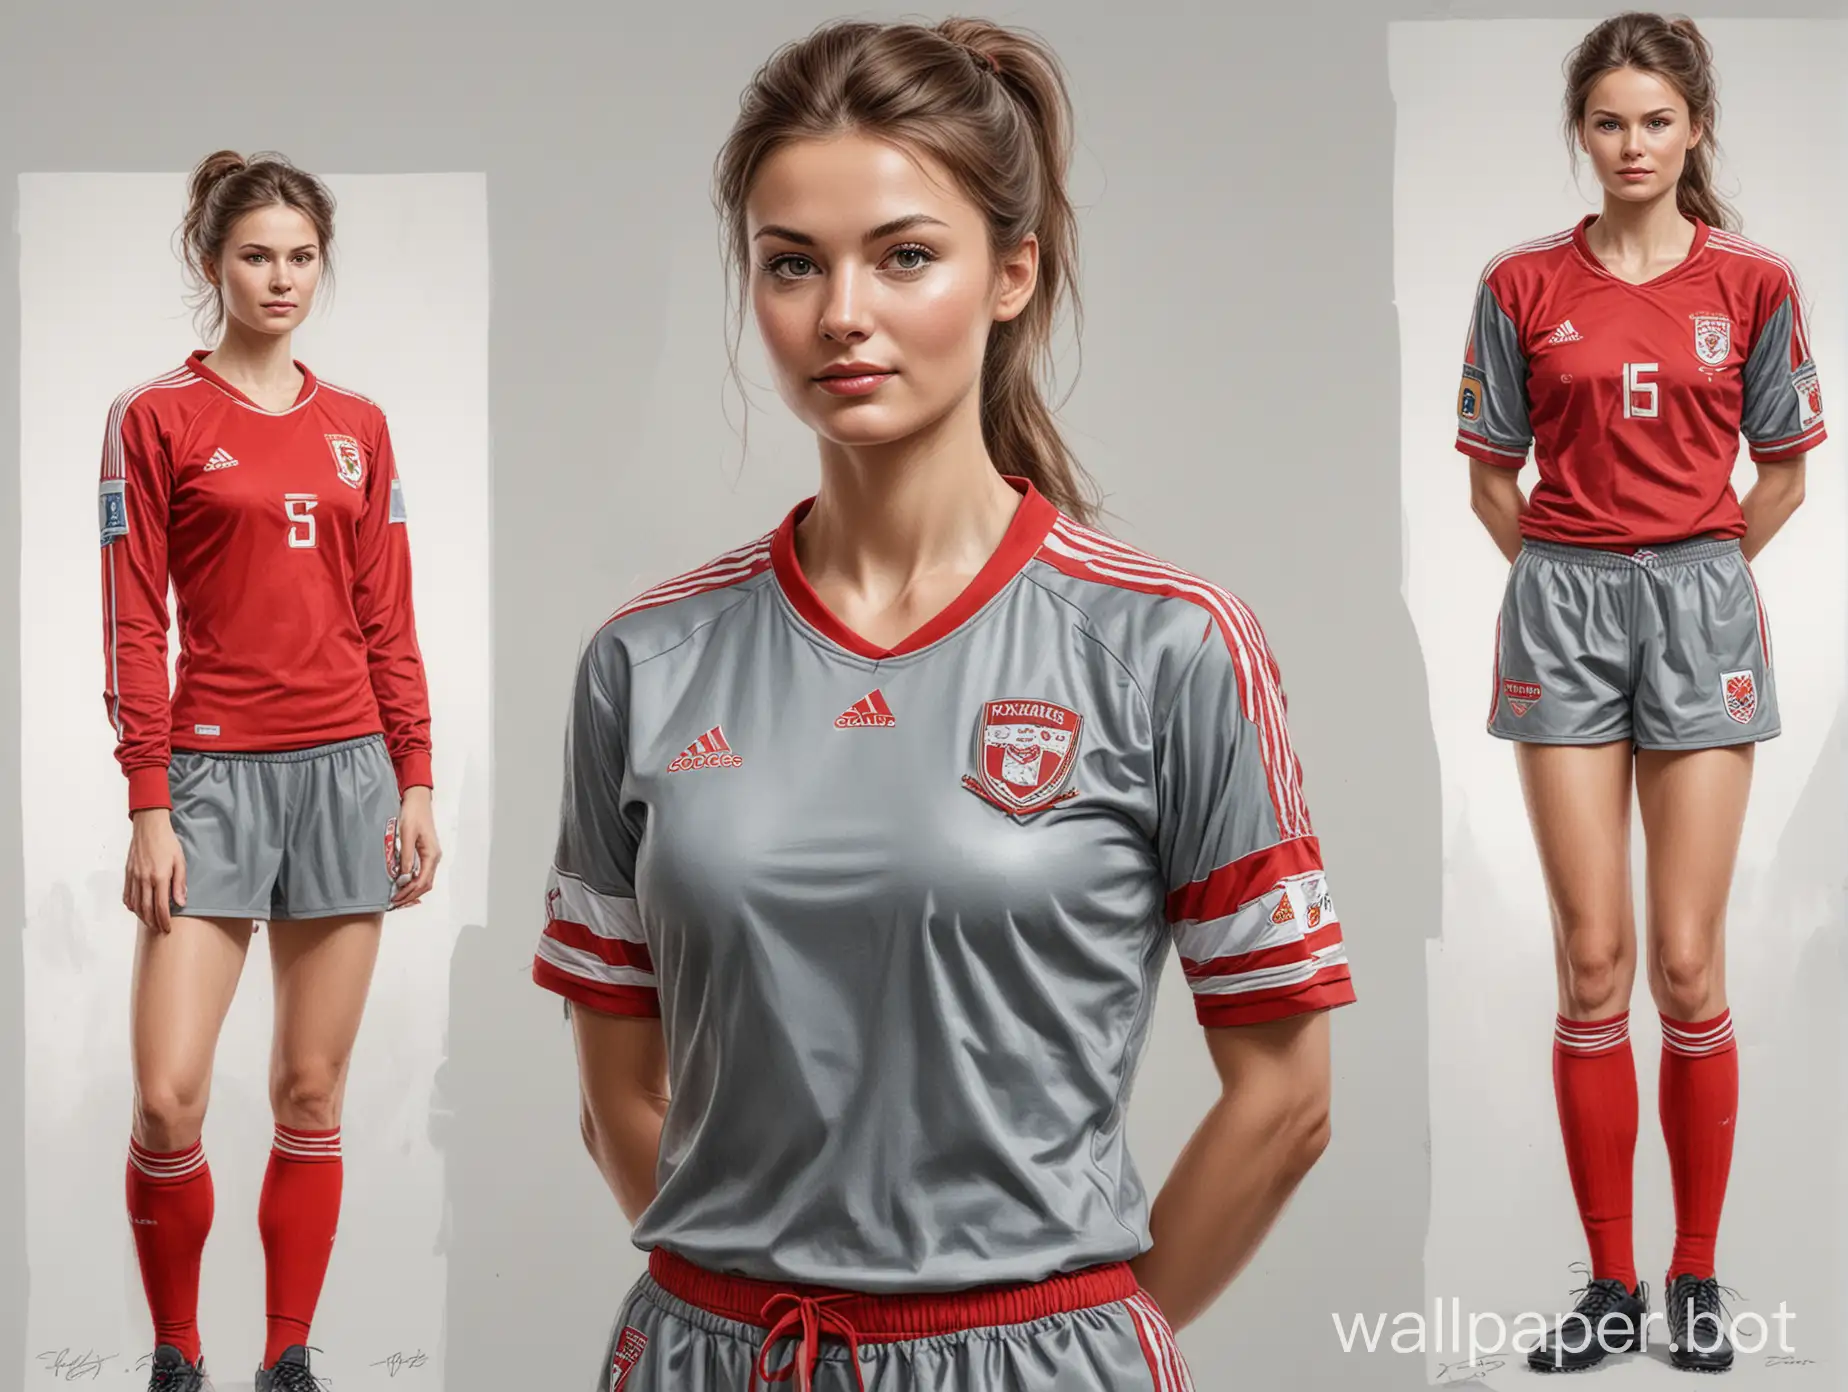 Portrait-of-Dina-Sokolova-25-in-GrayRed-Soccer-Uniform-on-White-Background